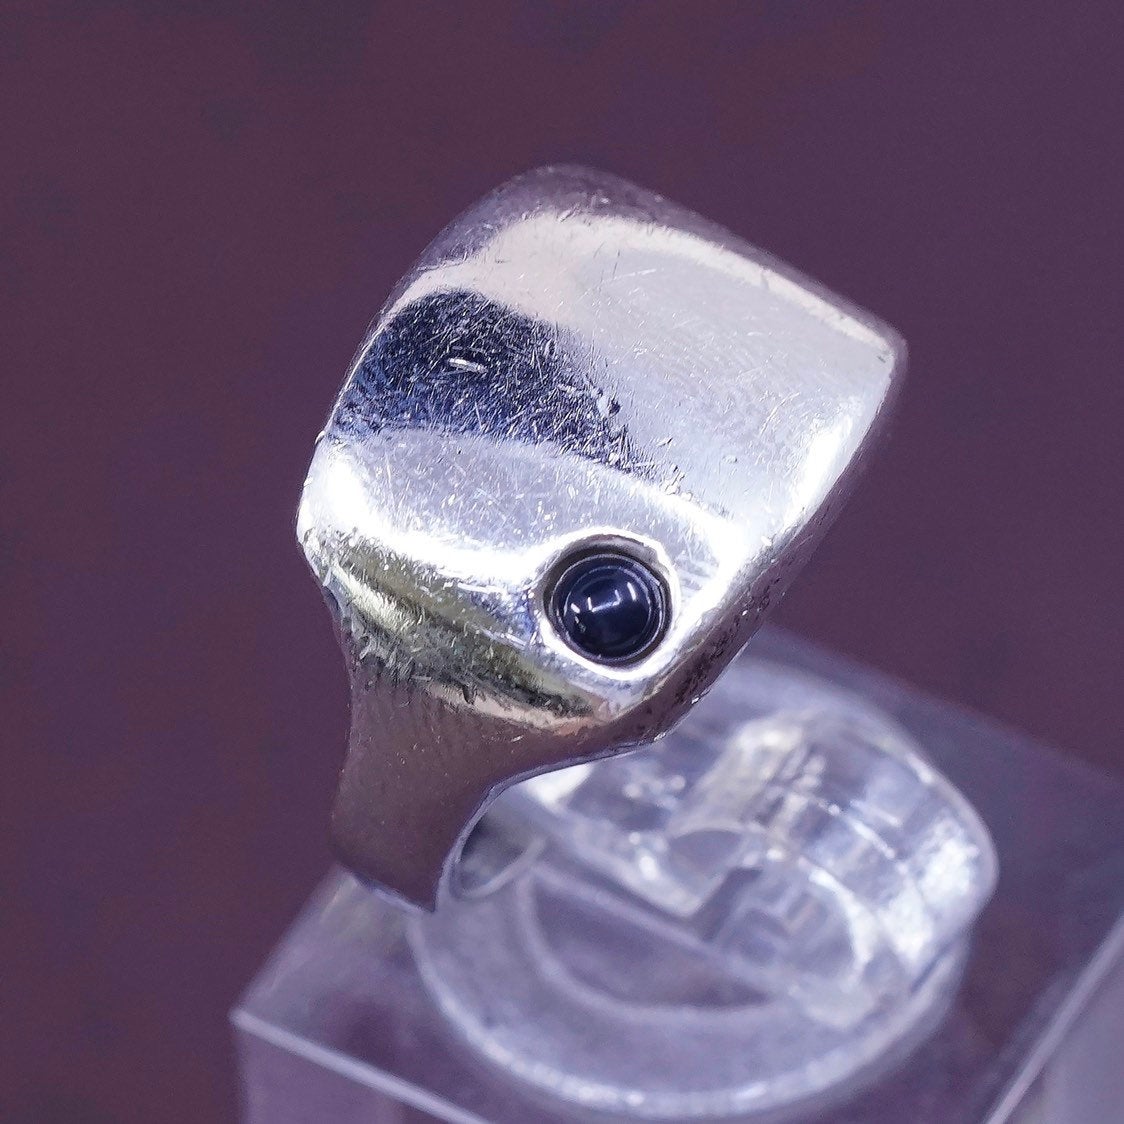 Size 6, vintage JAD Sterling silver ring, Modern 925 statement ring w/ jade